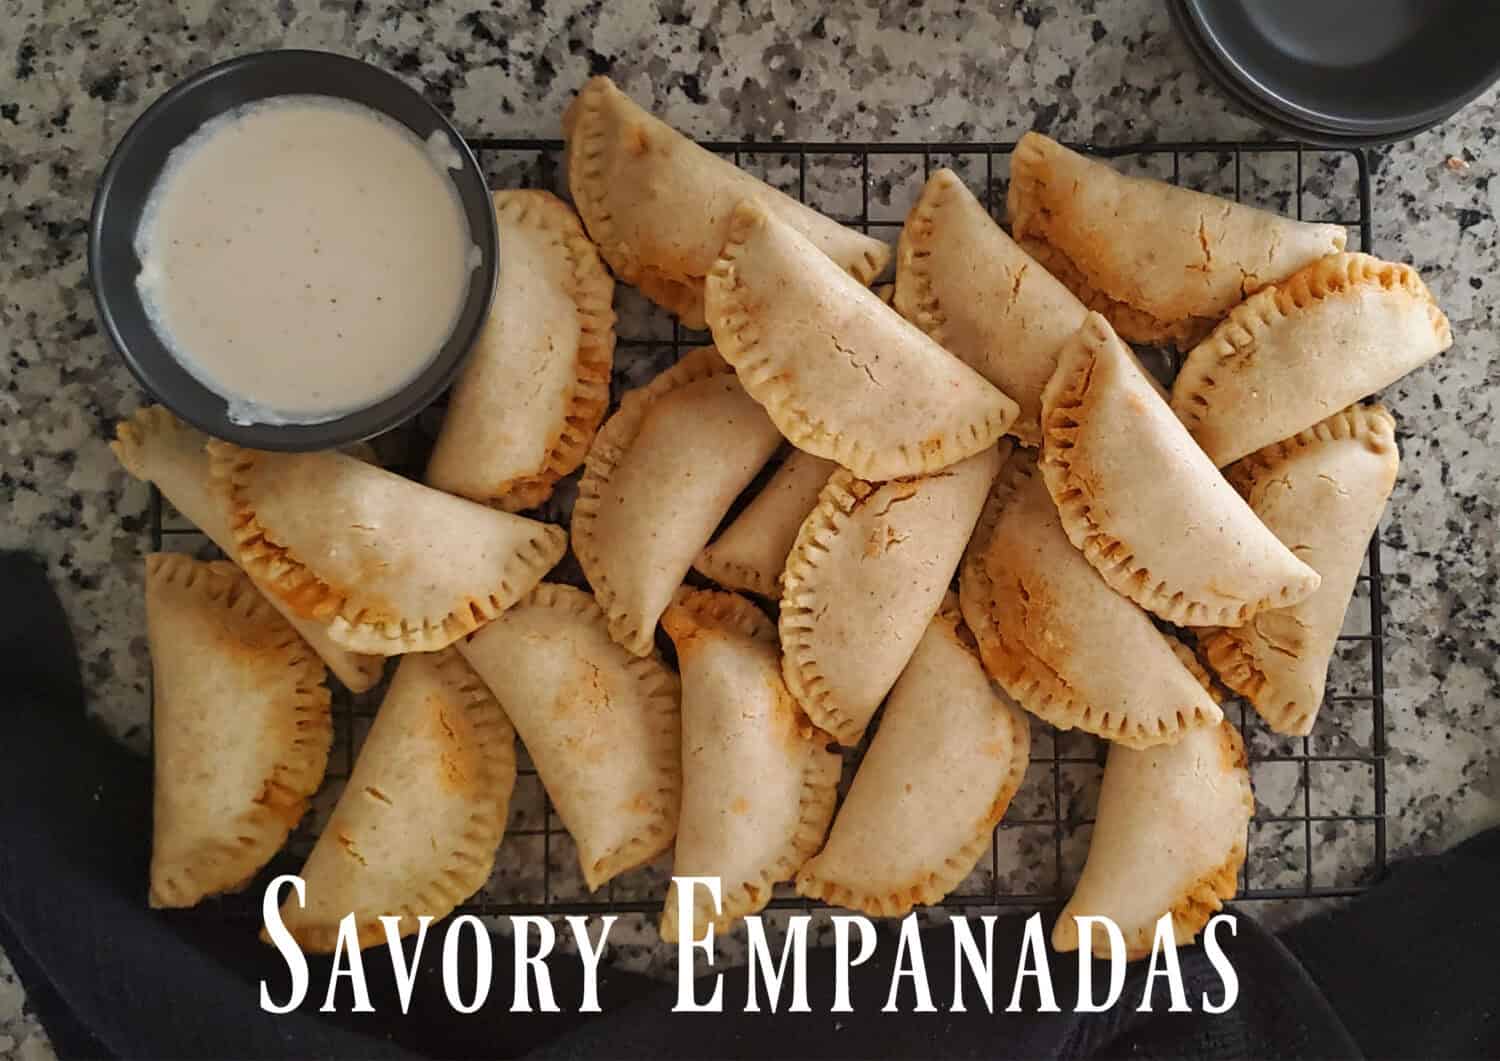 Savory Empanadas: Shredded pork & chorizo, garlic, onions and seasonings. Great for snacks, dinner, game day or any Mexicana feast!